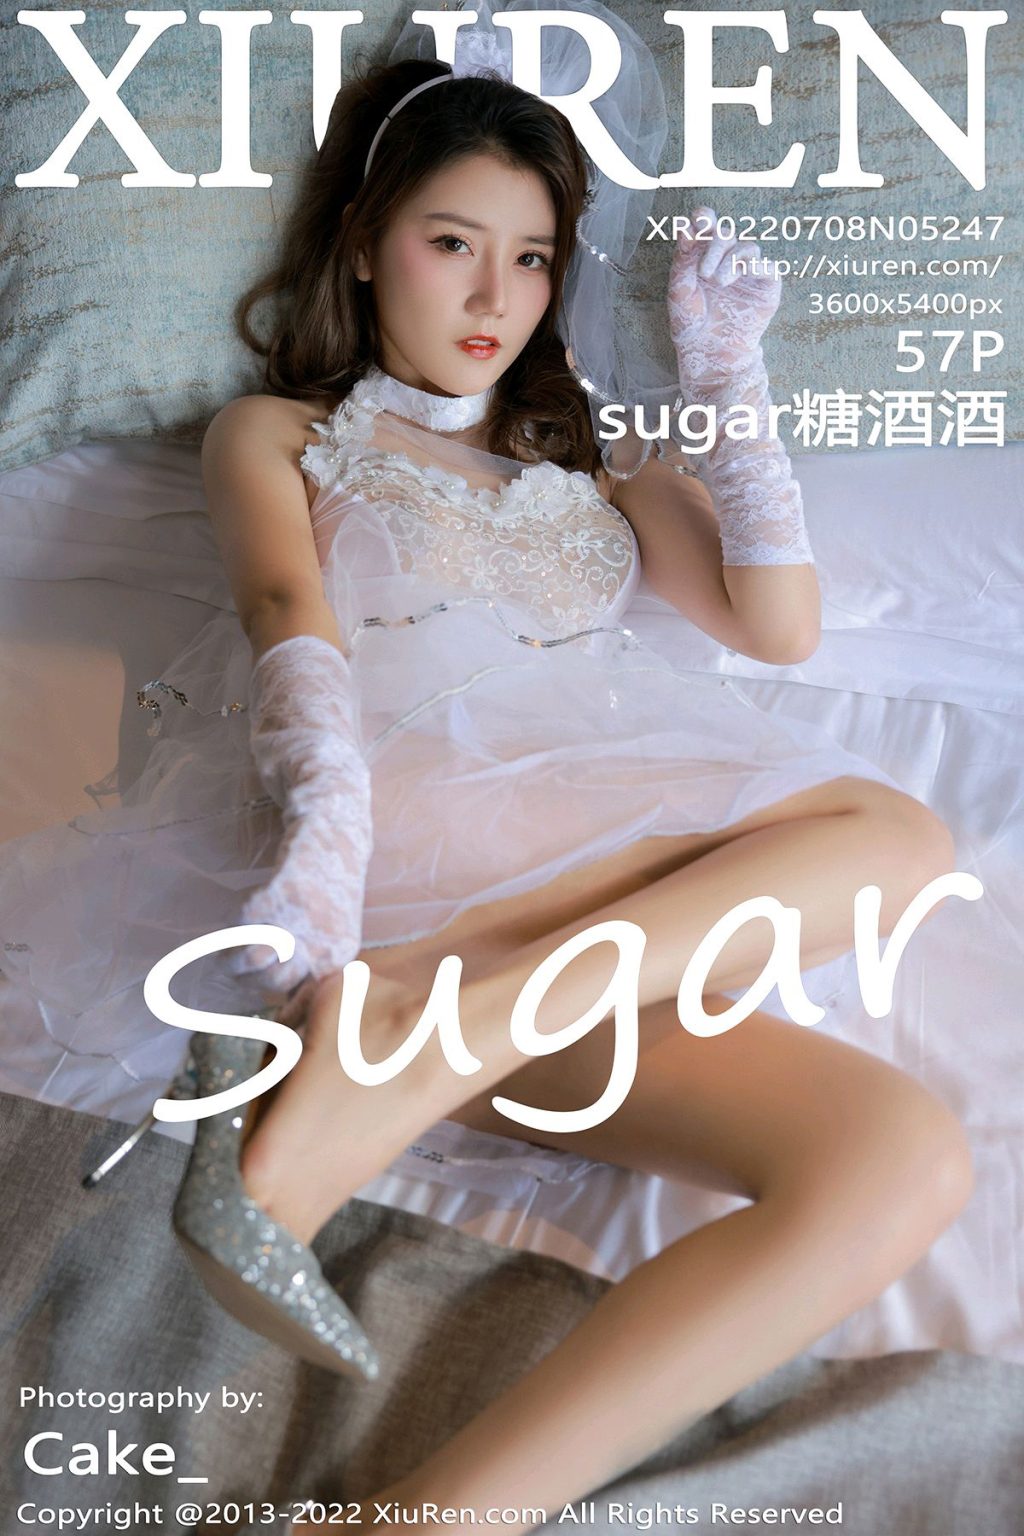 Watch sexy XIUREN No.5247: Sugar糖酒酒 photos